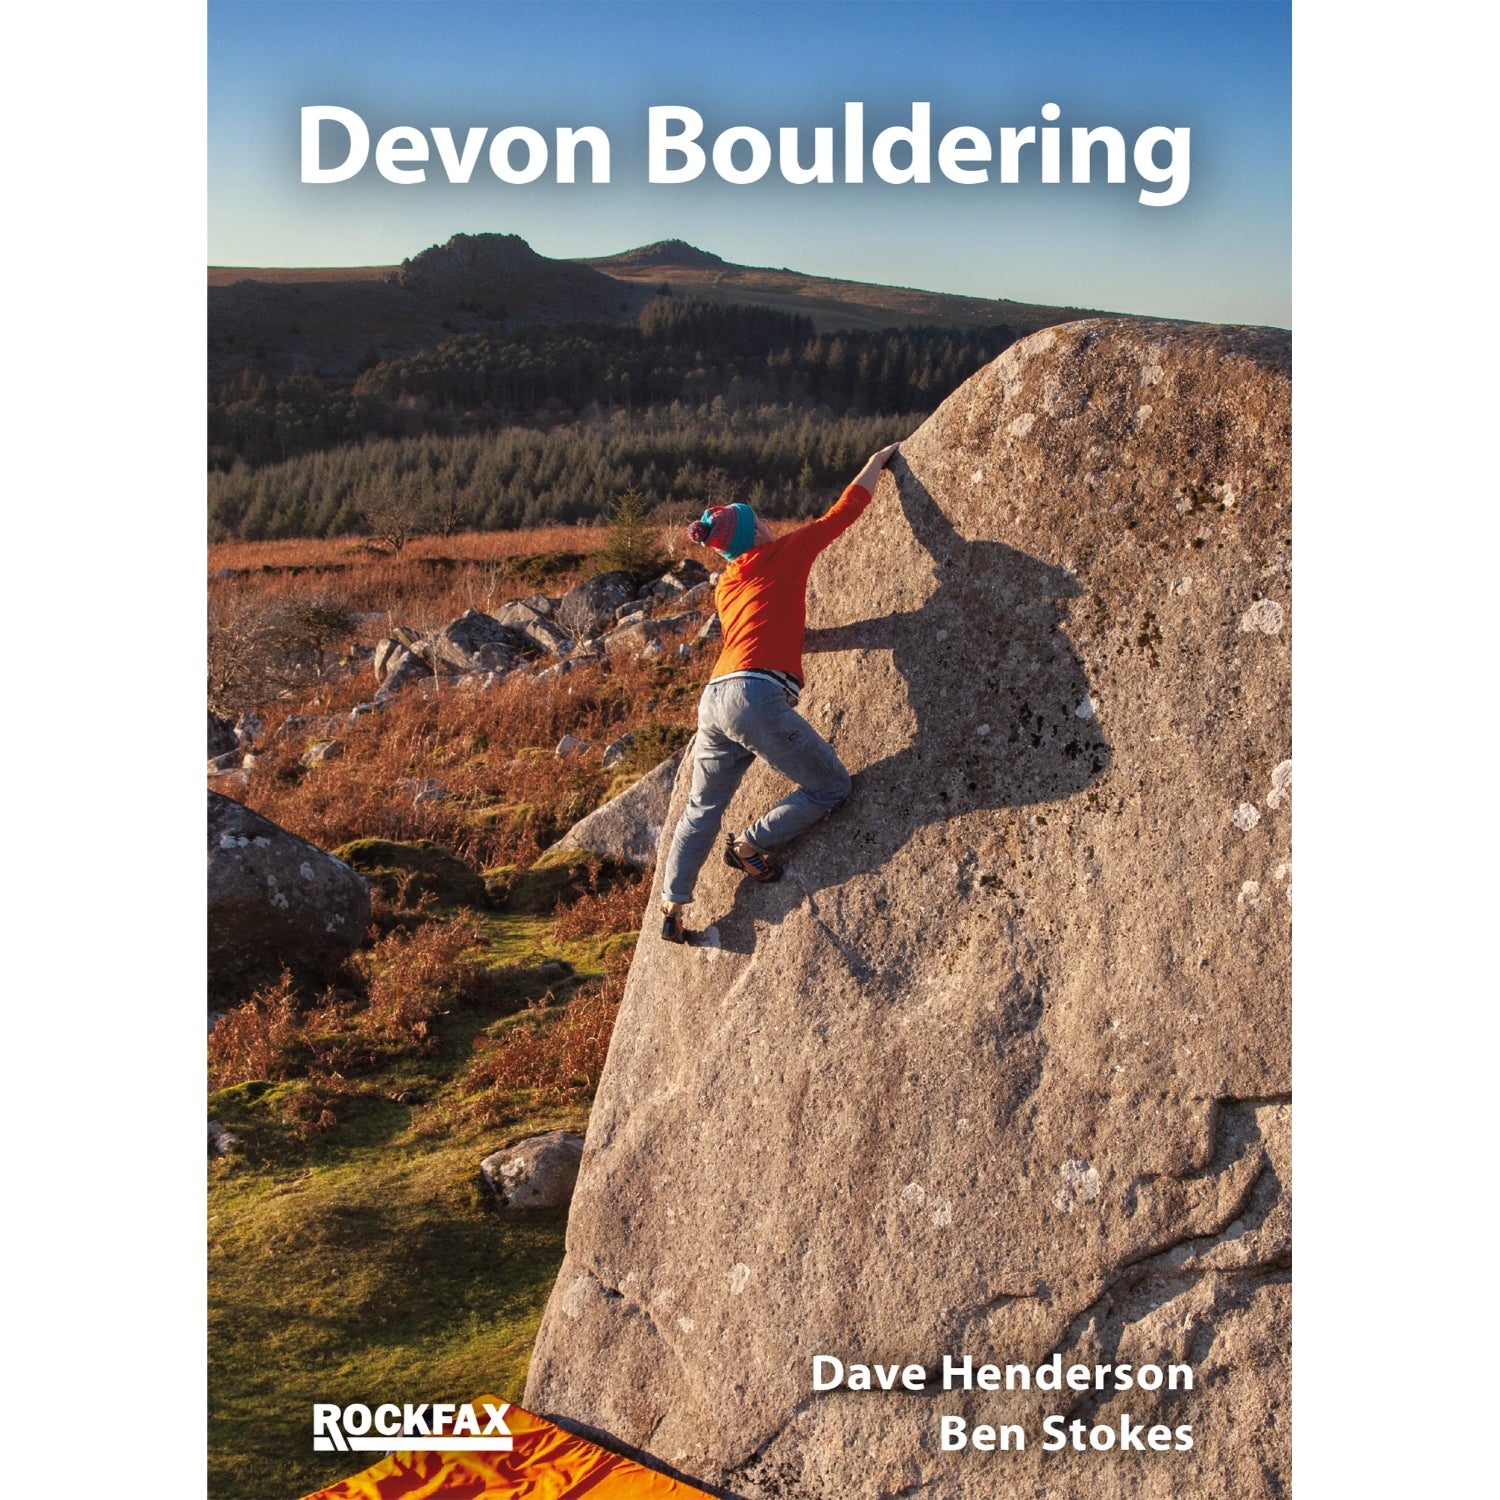 Devon Bouldering (Rockfax)